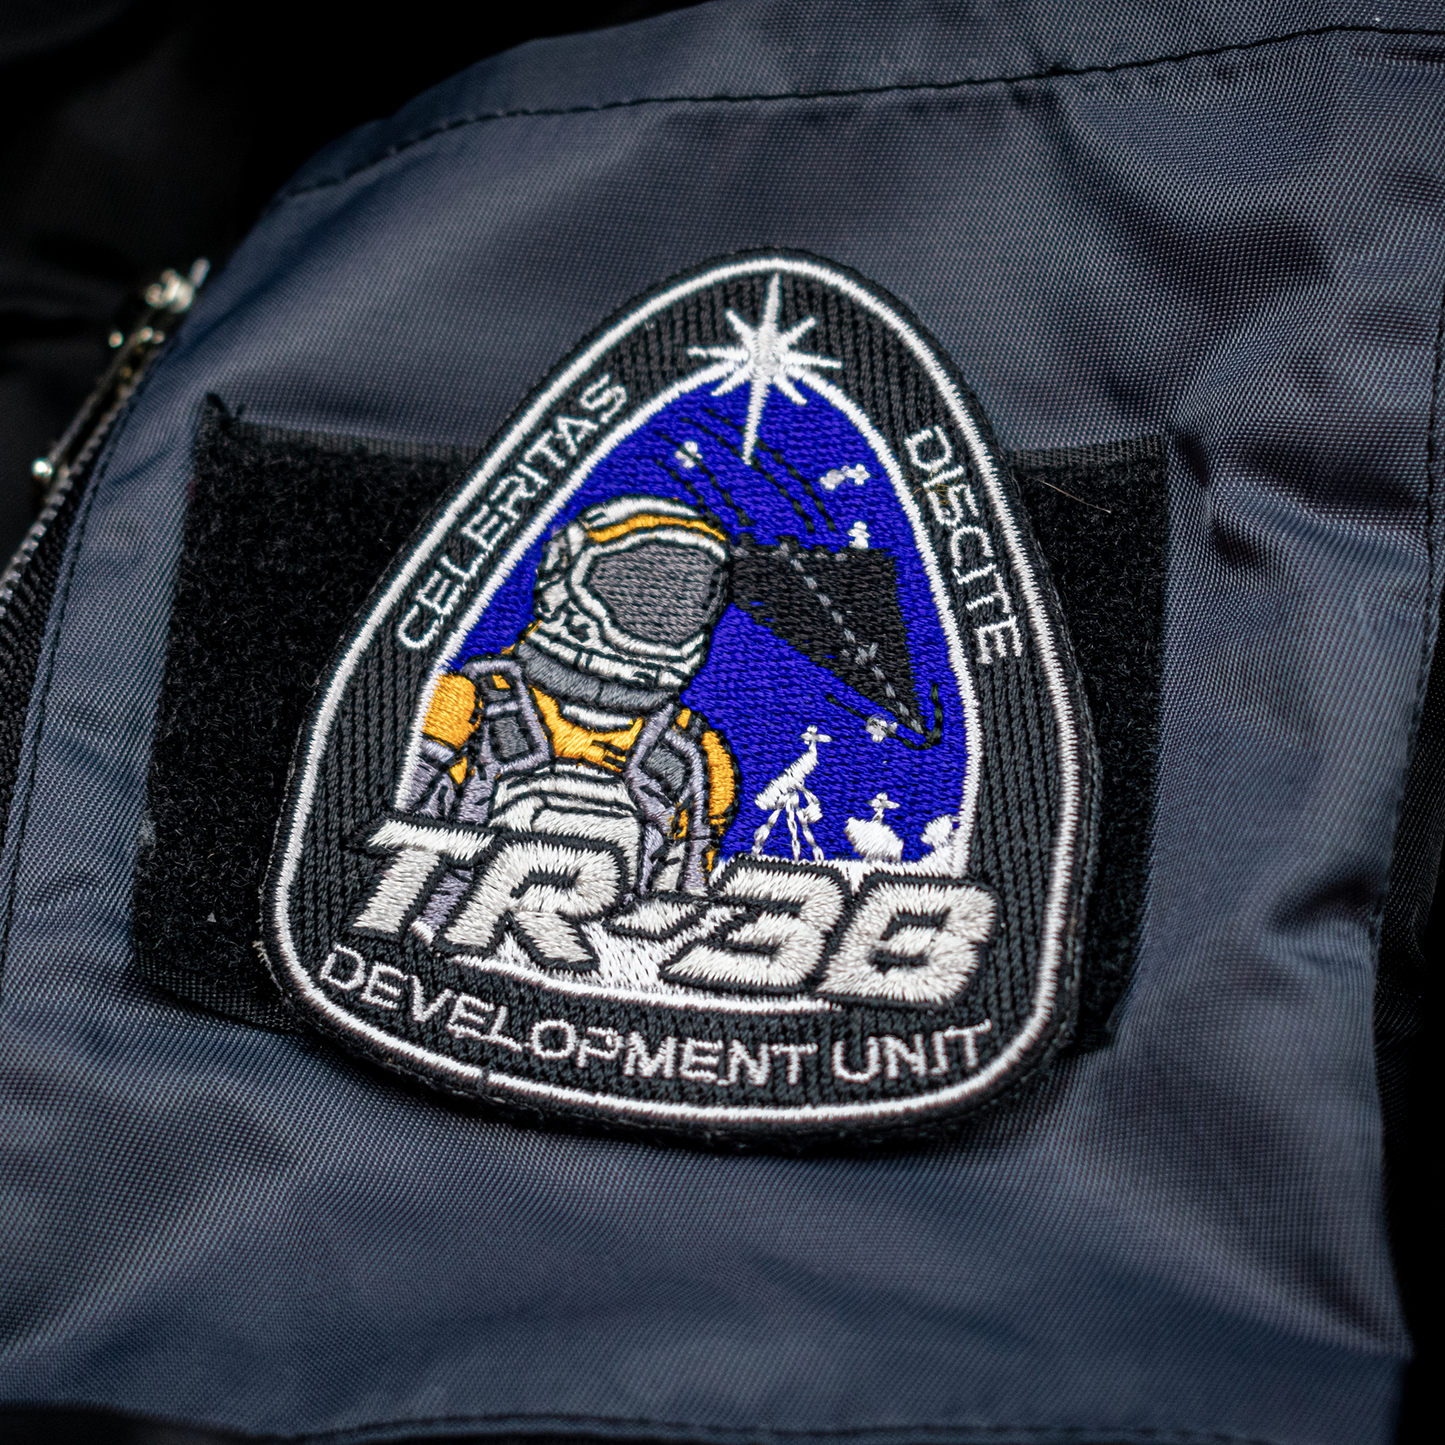 TR-3B Mission Patch